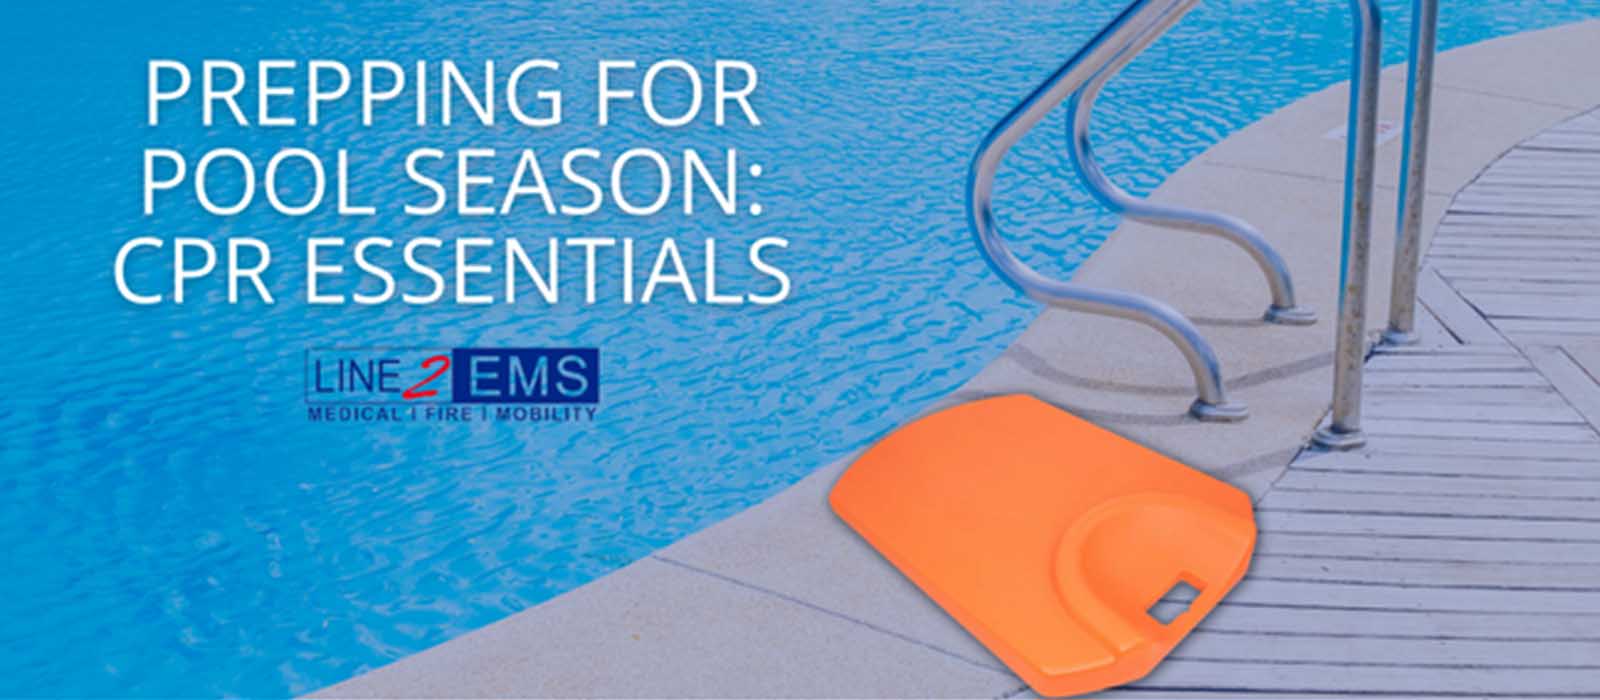 CPR essentials for pool season